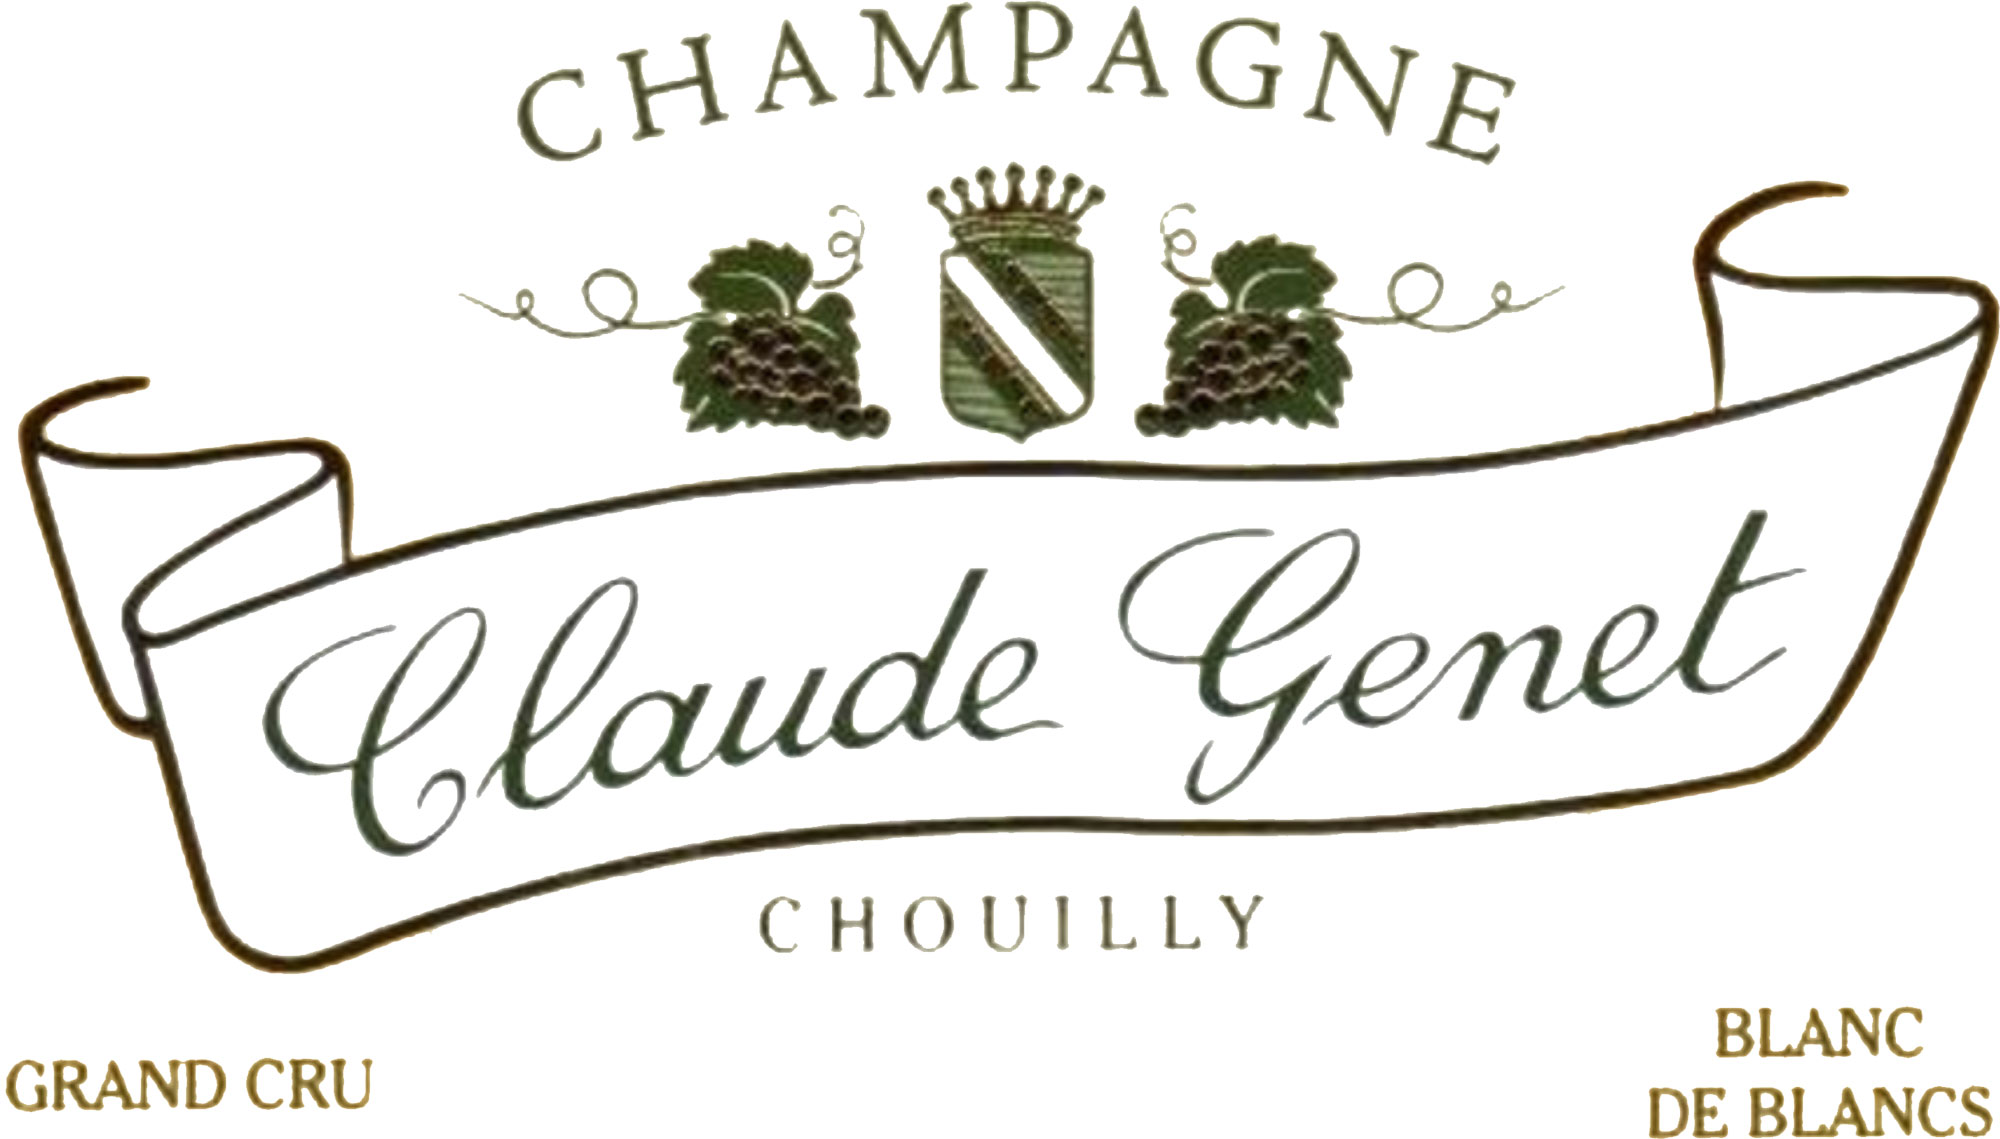 Champagne Claude Genet